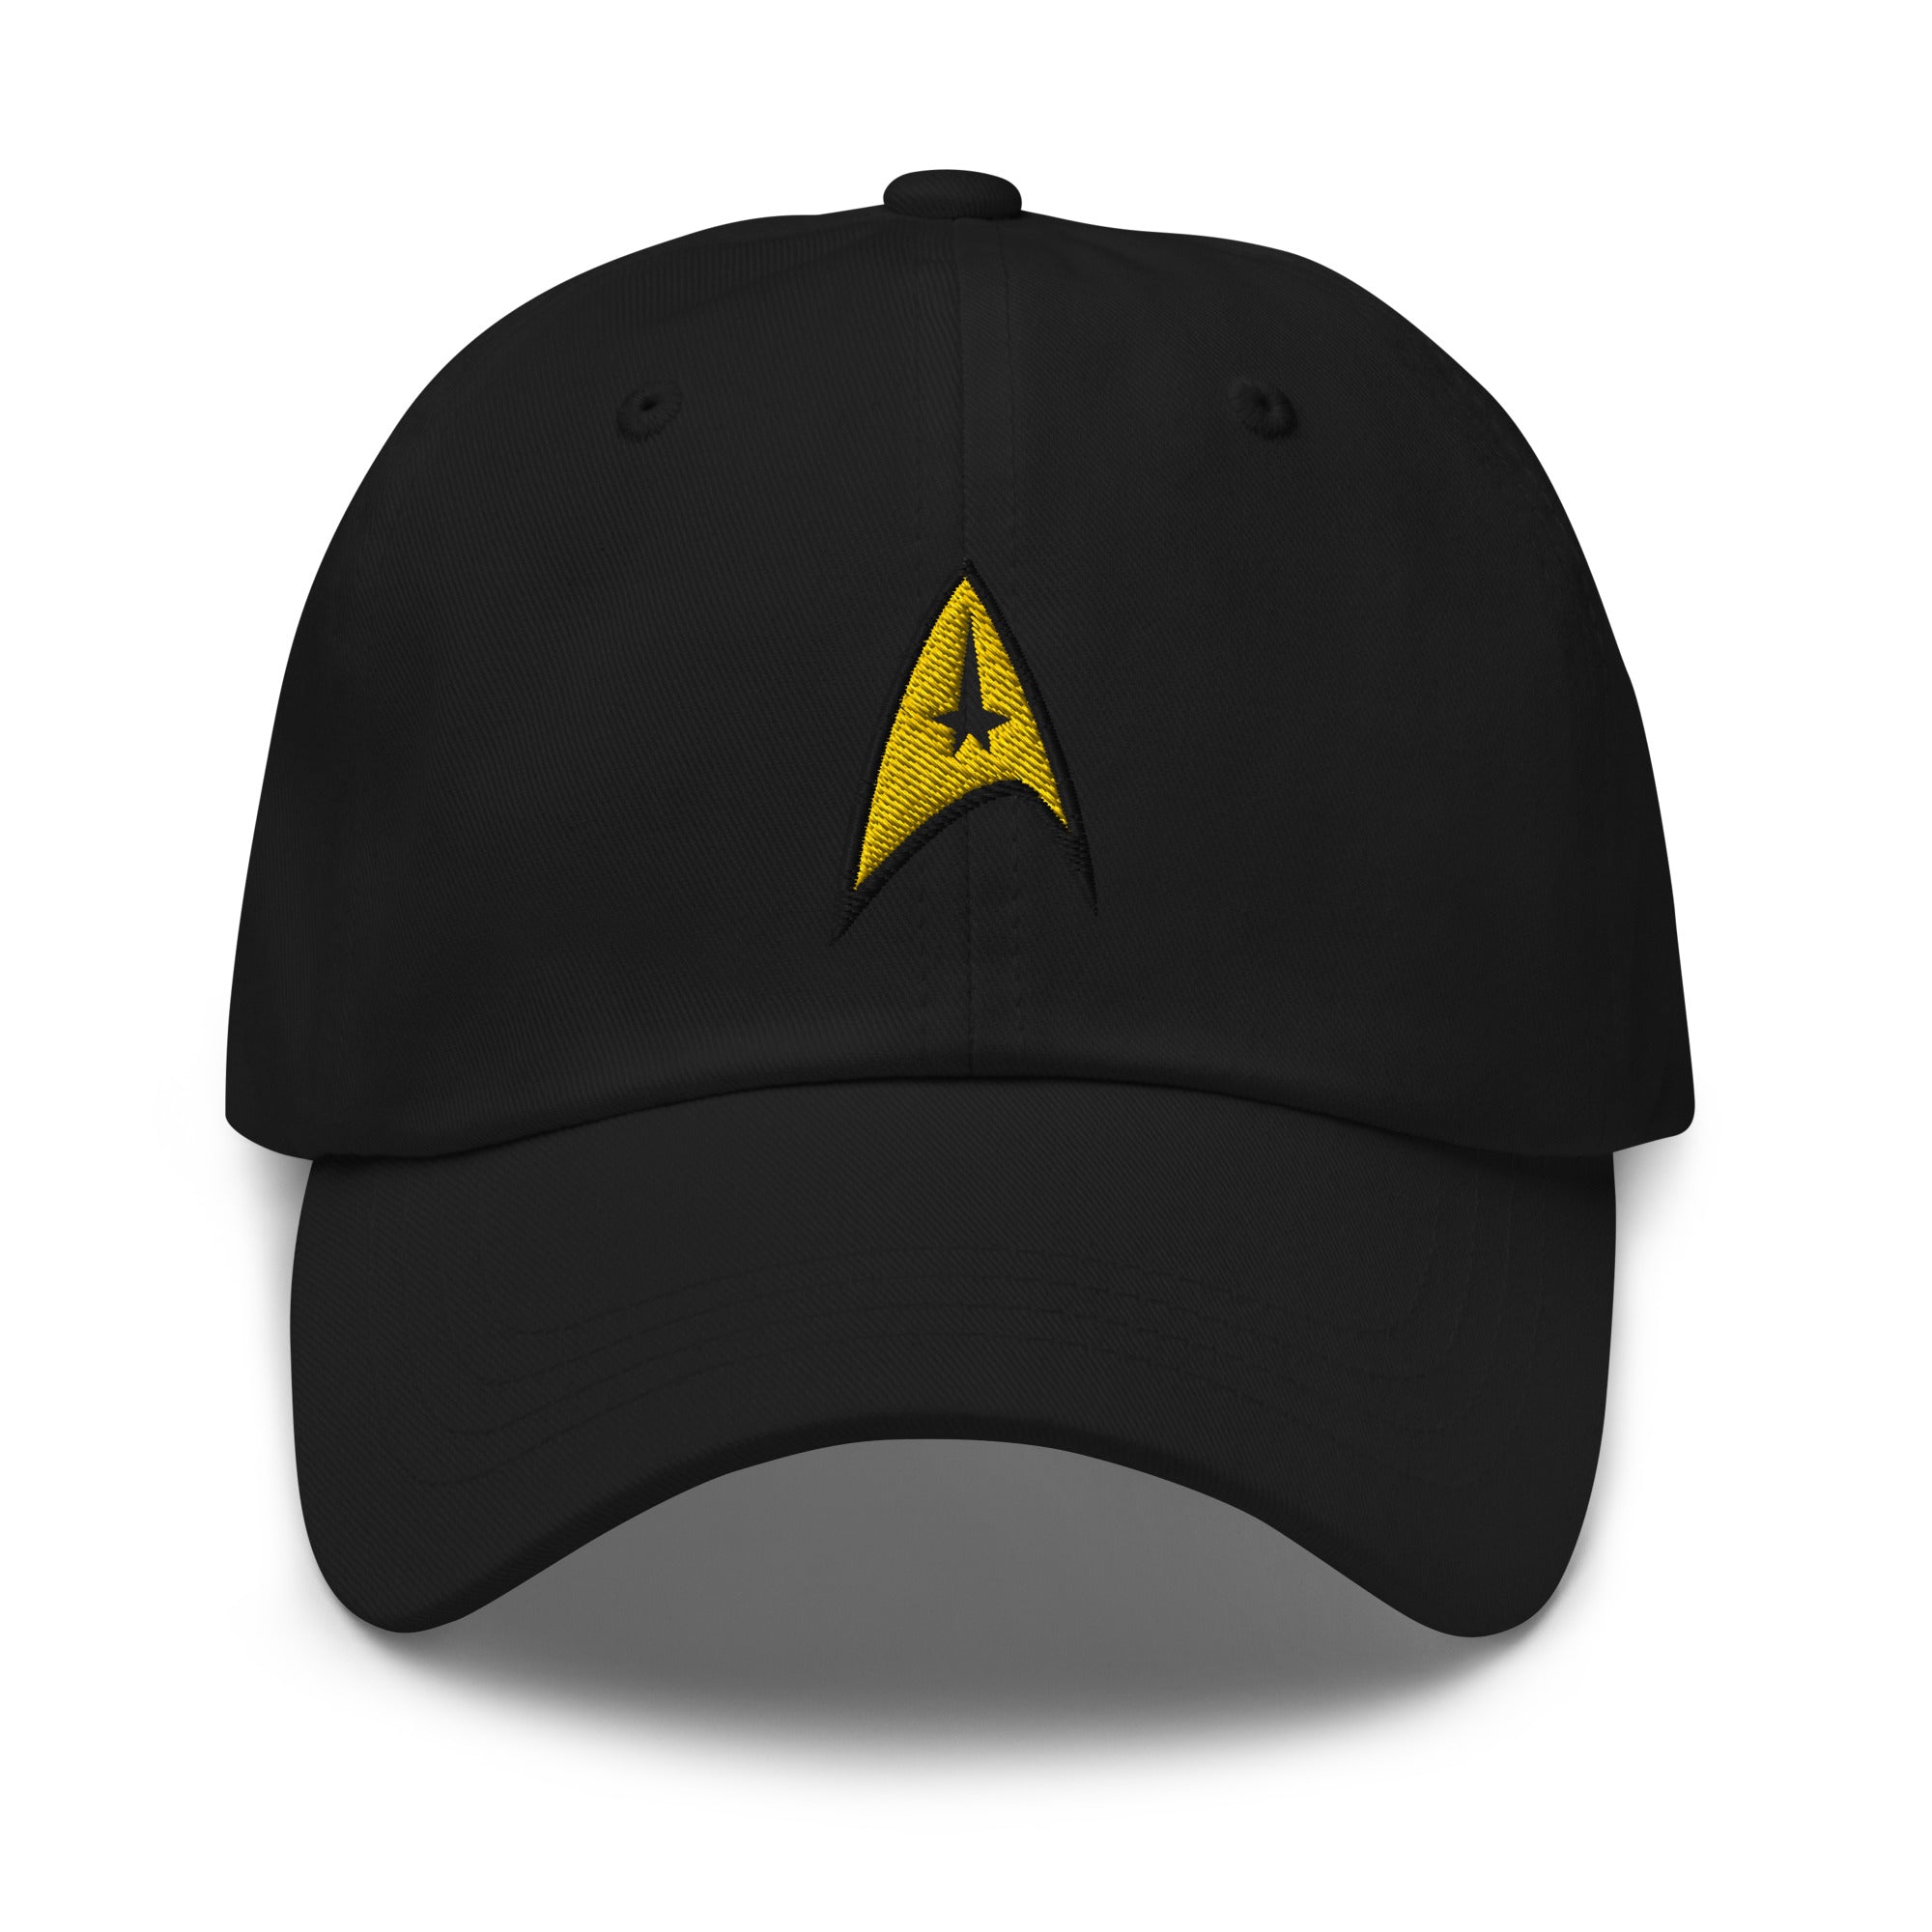 The Delta Insignia Starfleet Badge Embroidered Baseball Cap / Dad Hat Star Trek Style Cosplay - Edge of Life Designs